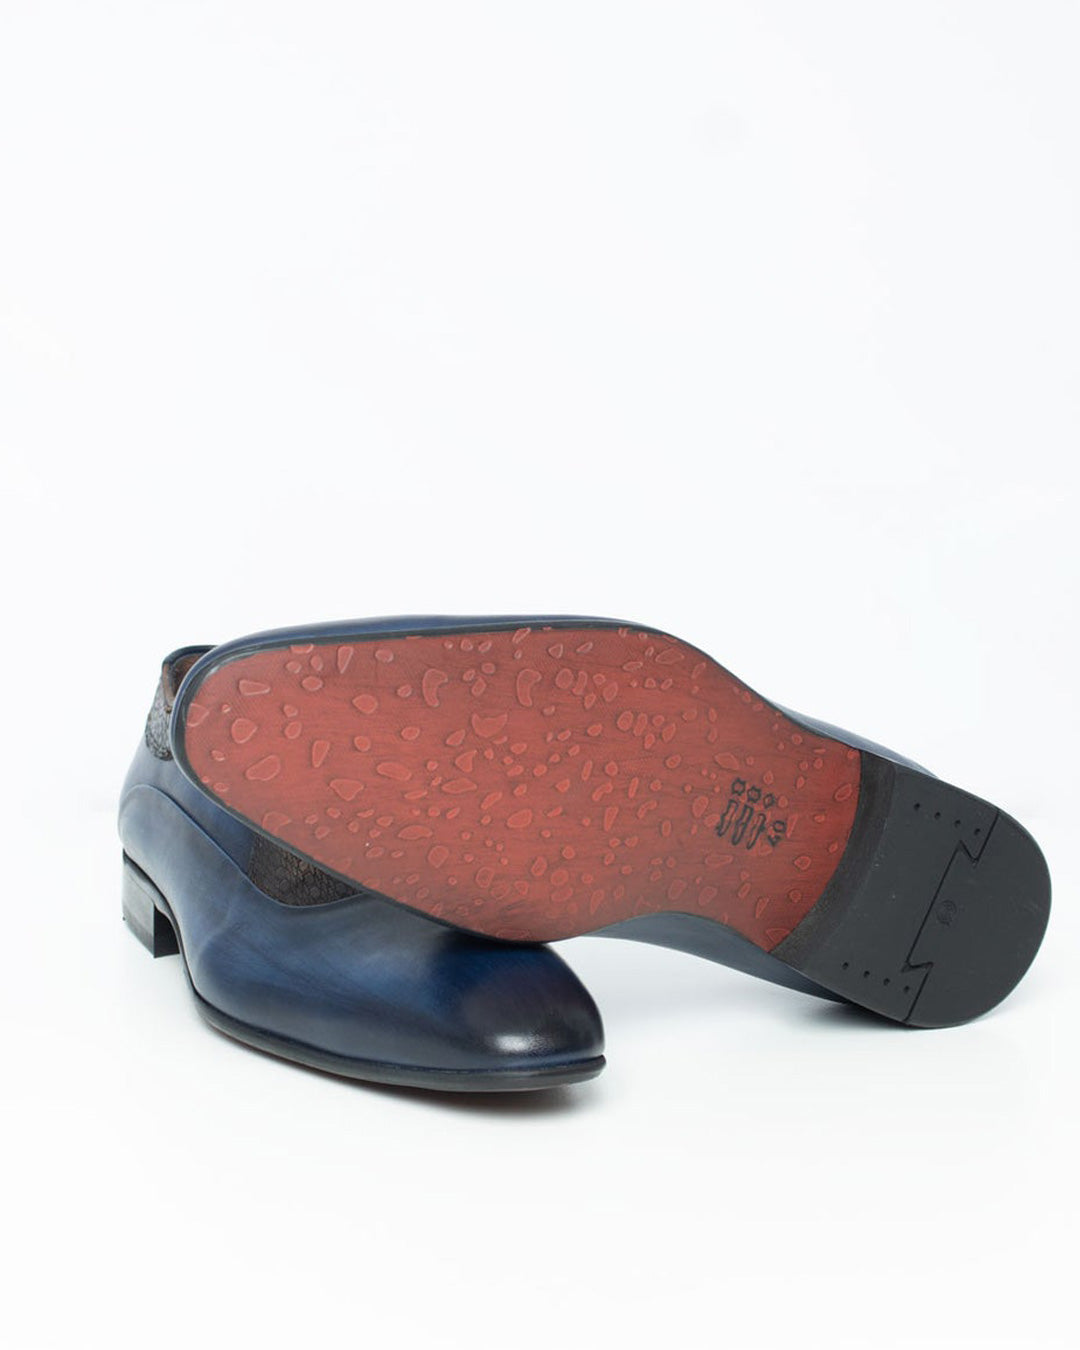 Calvano Formal Mens two tone blue/brown shoe